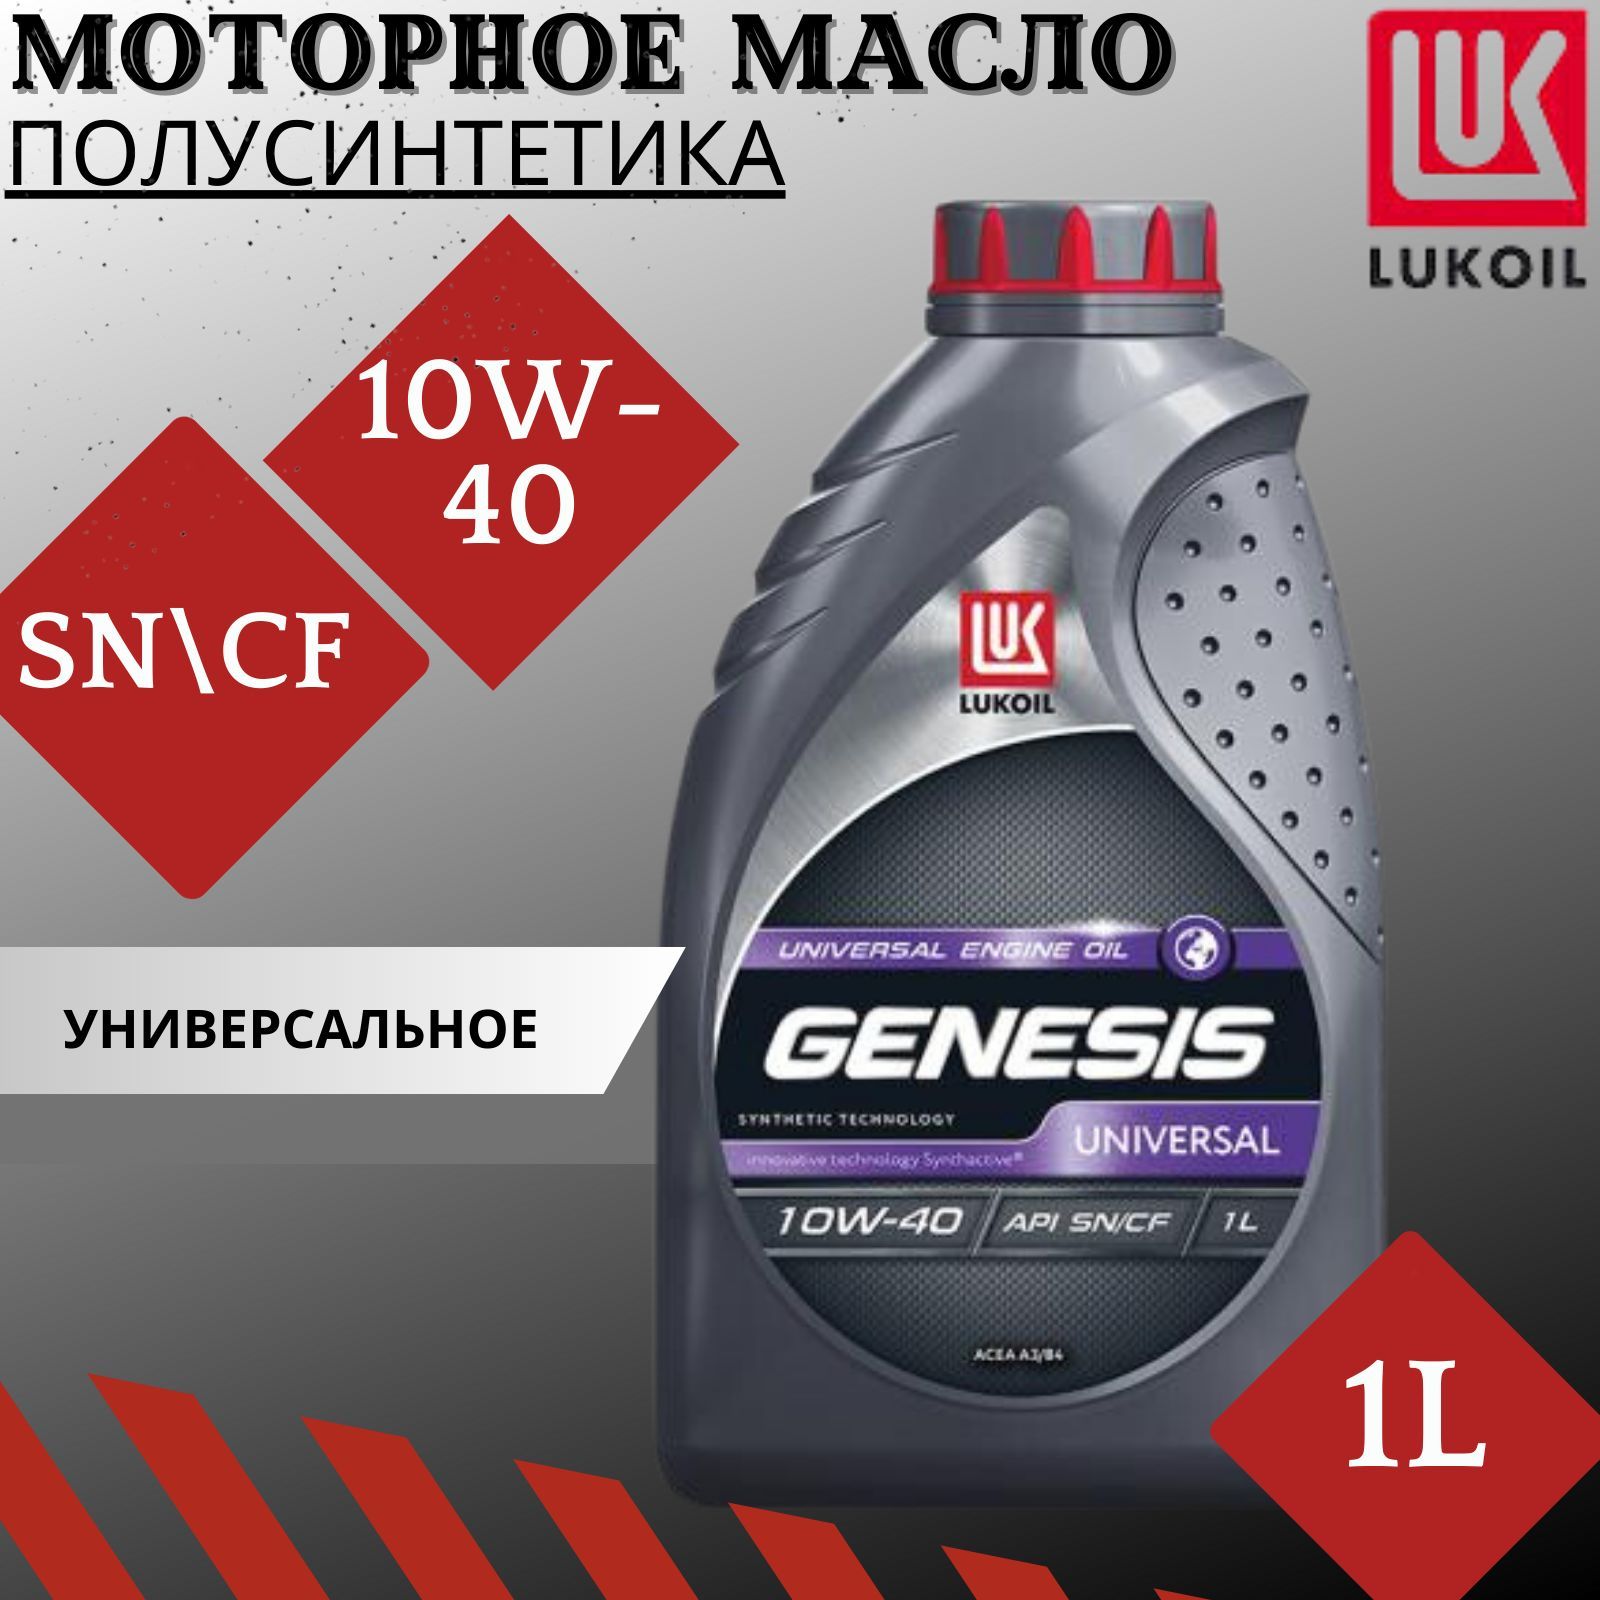 Масло генезис 10w 40 универсал. Моторное масло Генезис 10w 40 полусинтетика. 3148646 Lukoil Genesis Universal 10w-40 4l. Масло Genesis 10w30 сини свет.